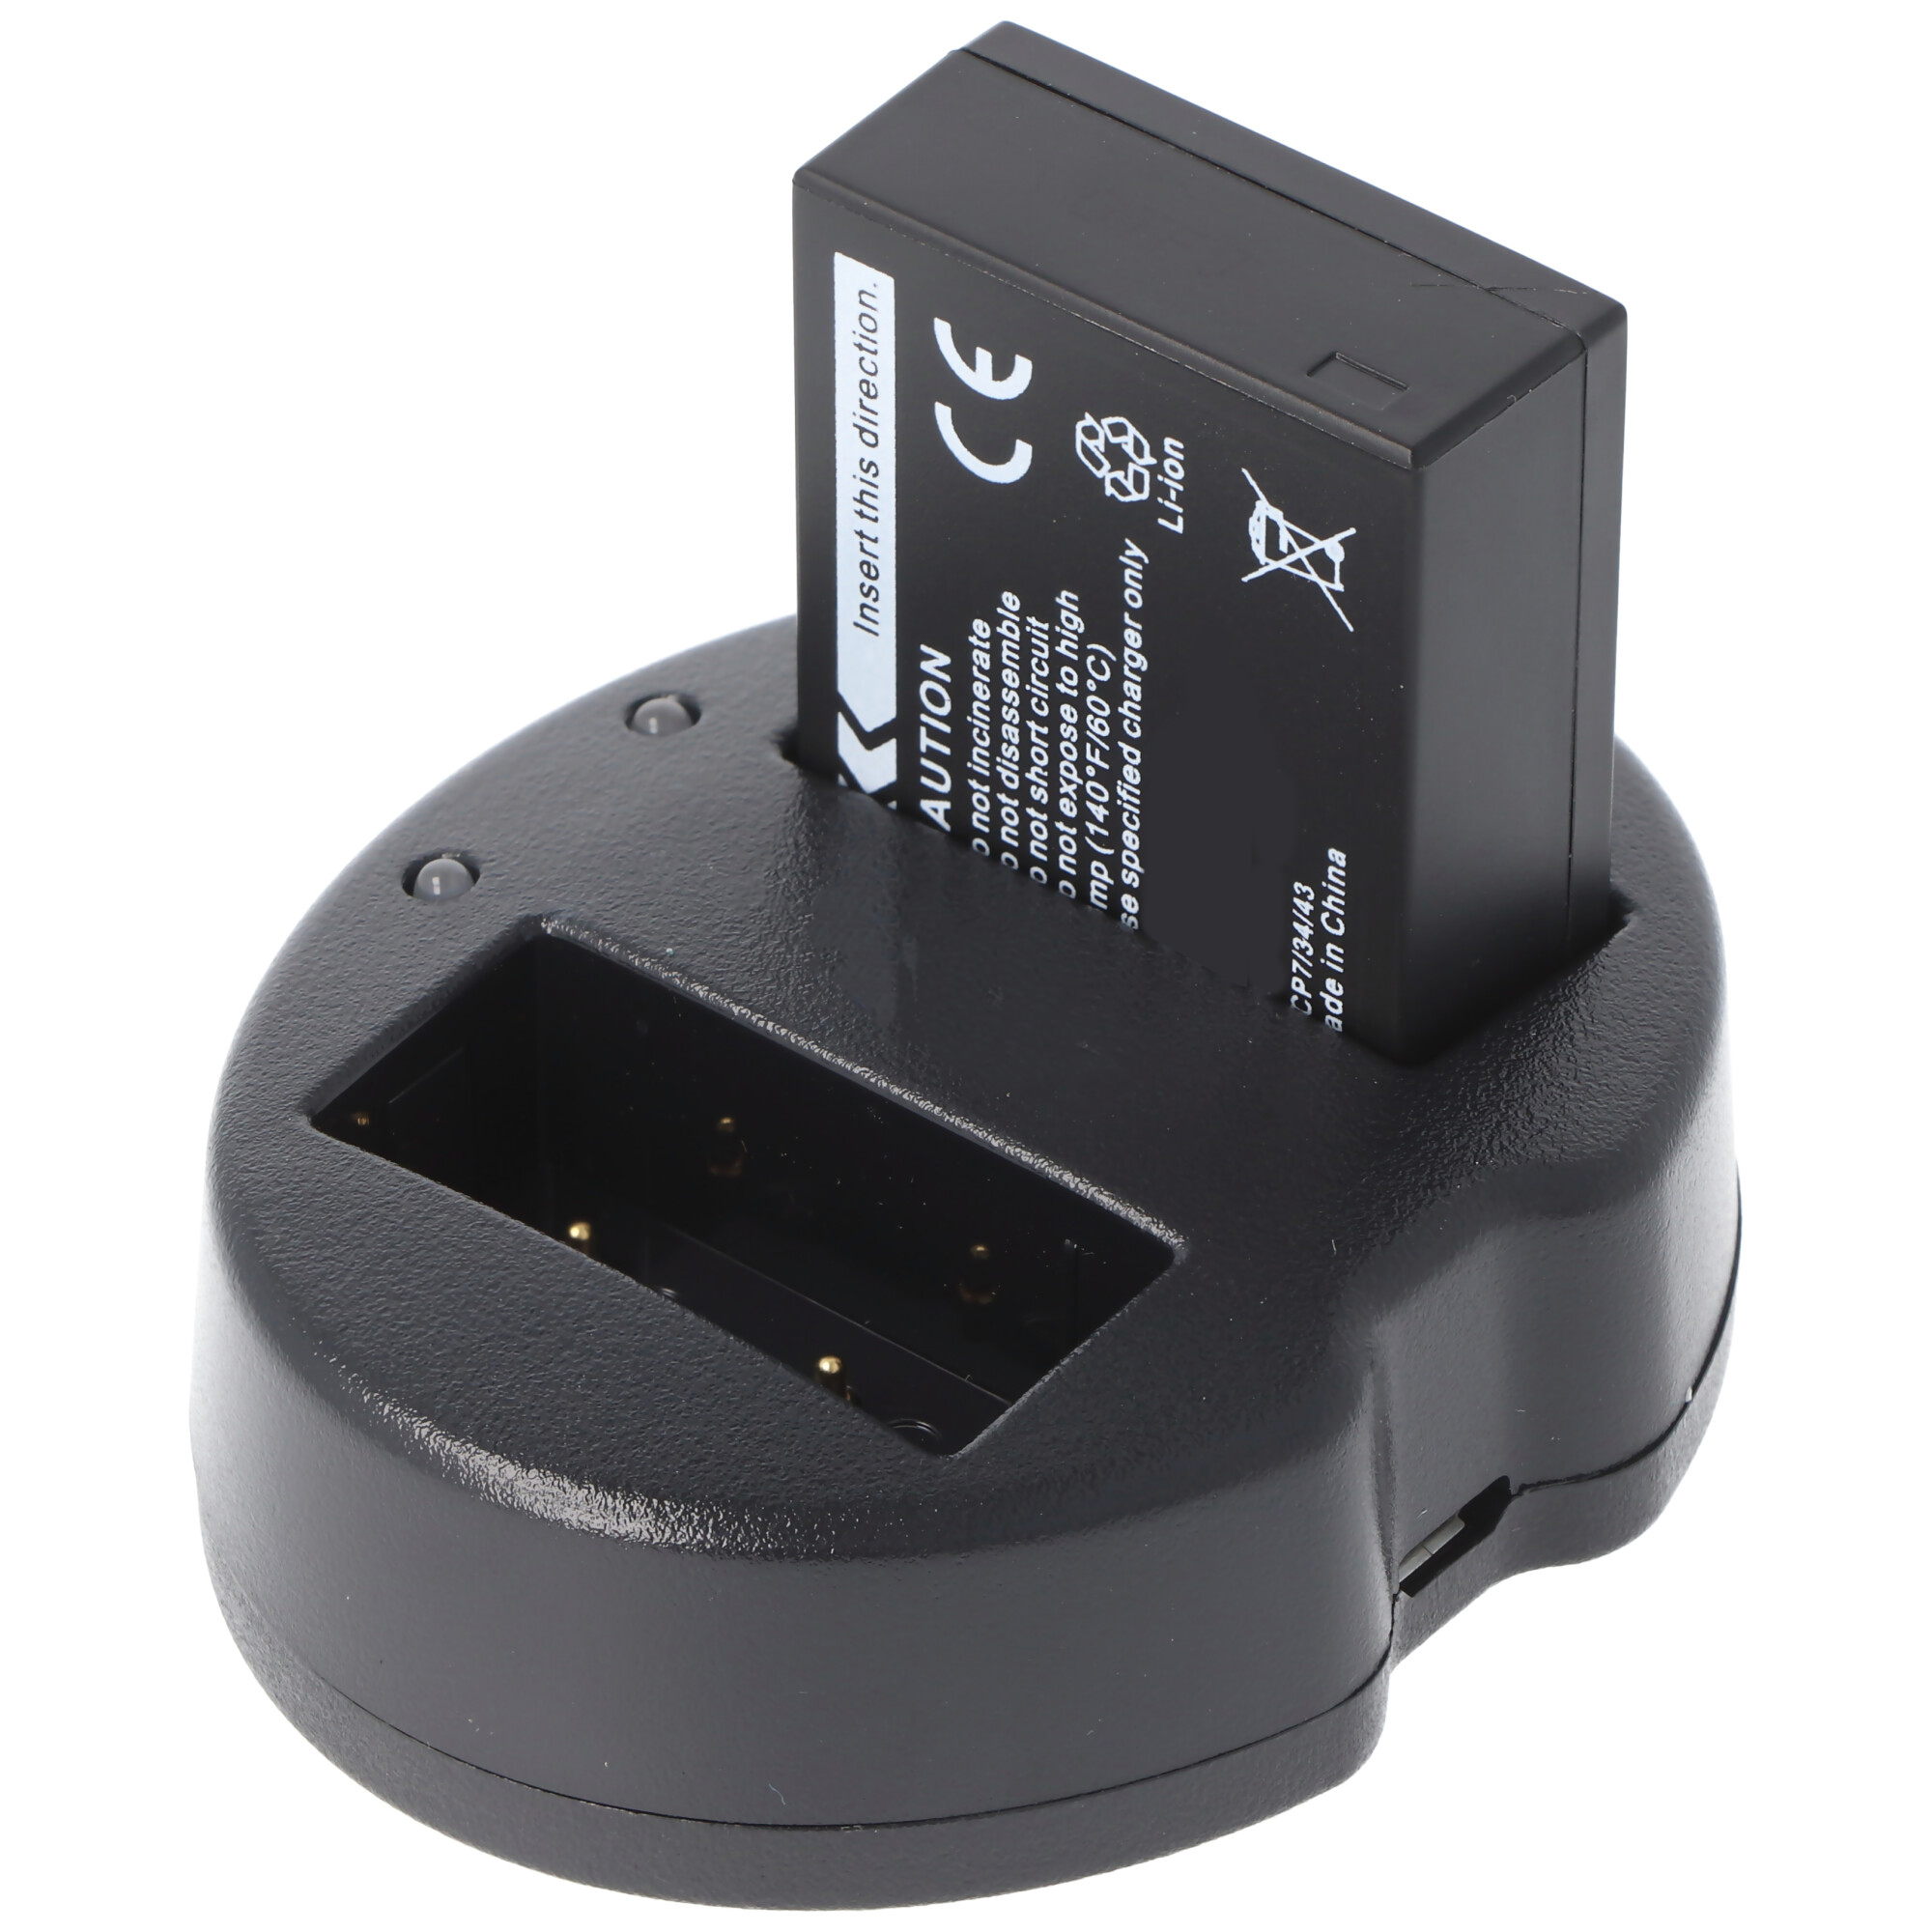 2-Fach USB Ladegerät für zwei Stück Fuji Akku NP-W126, Lieferung inklusive Ladeadapter und USB-Ladekabel